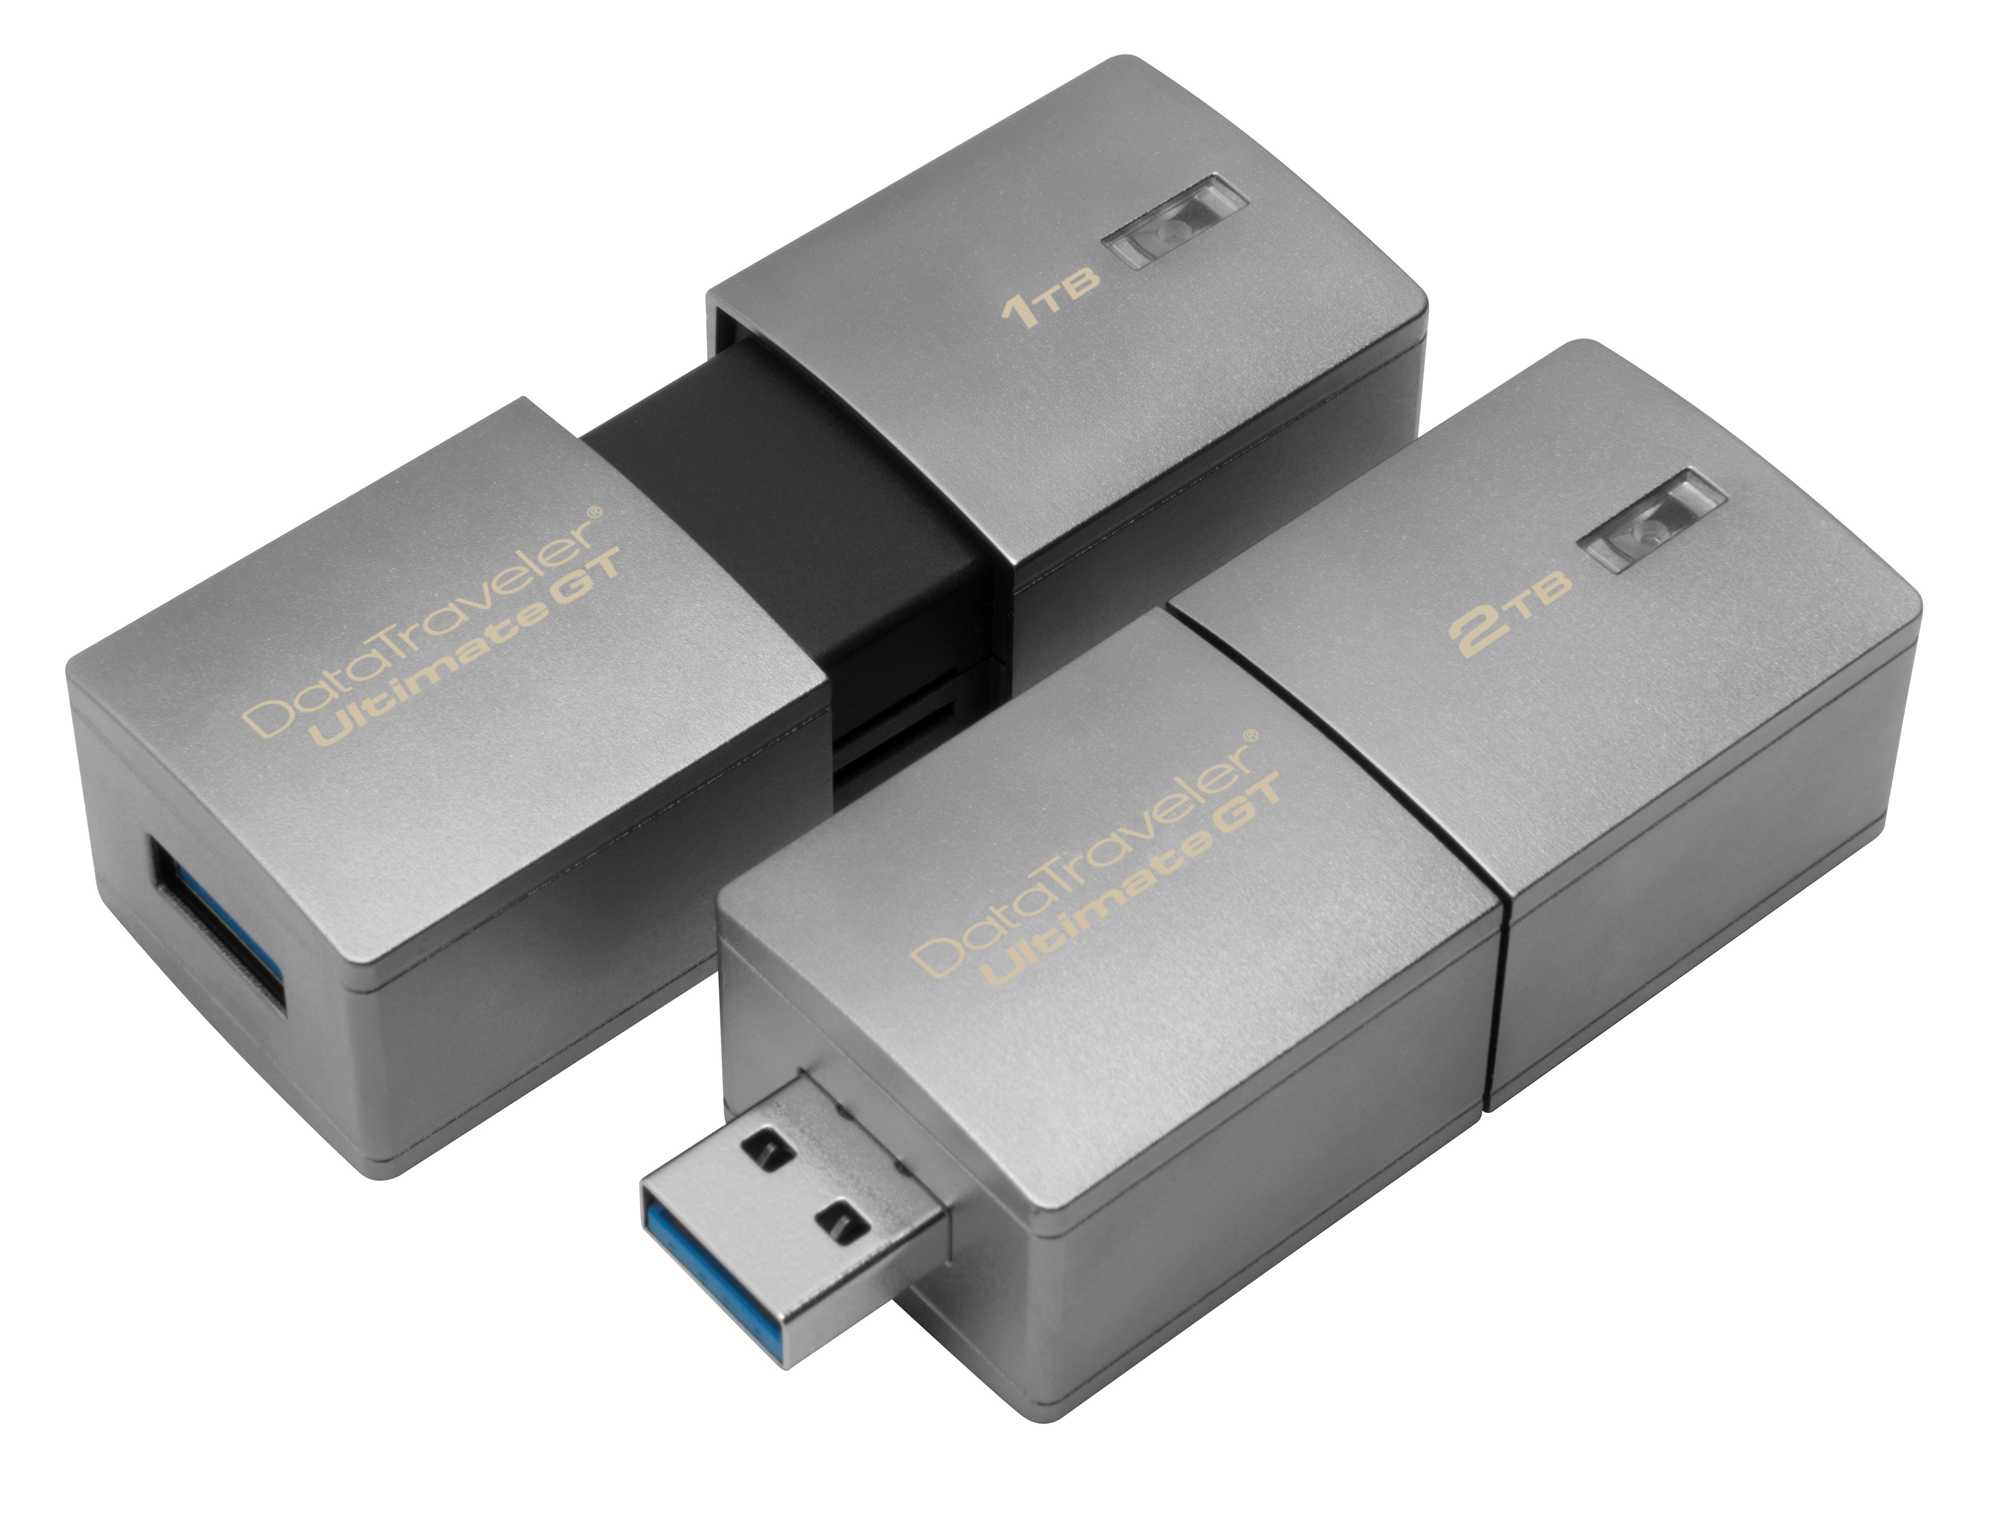 Kingston lanciert USB-Stick mit 2 Terabyte